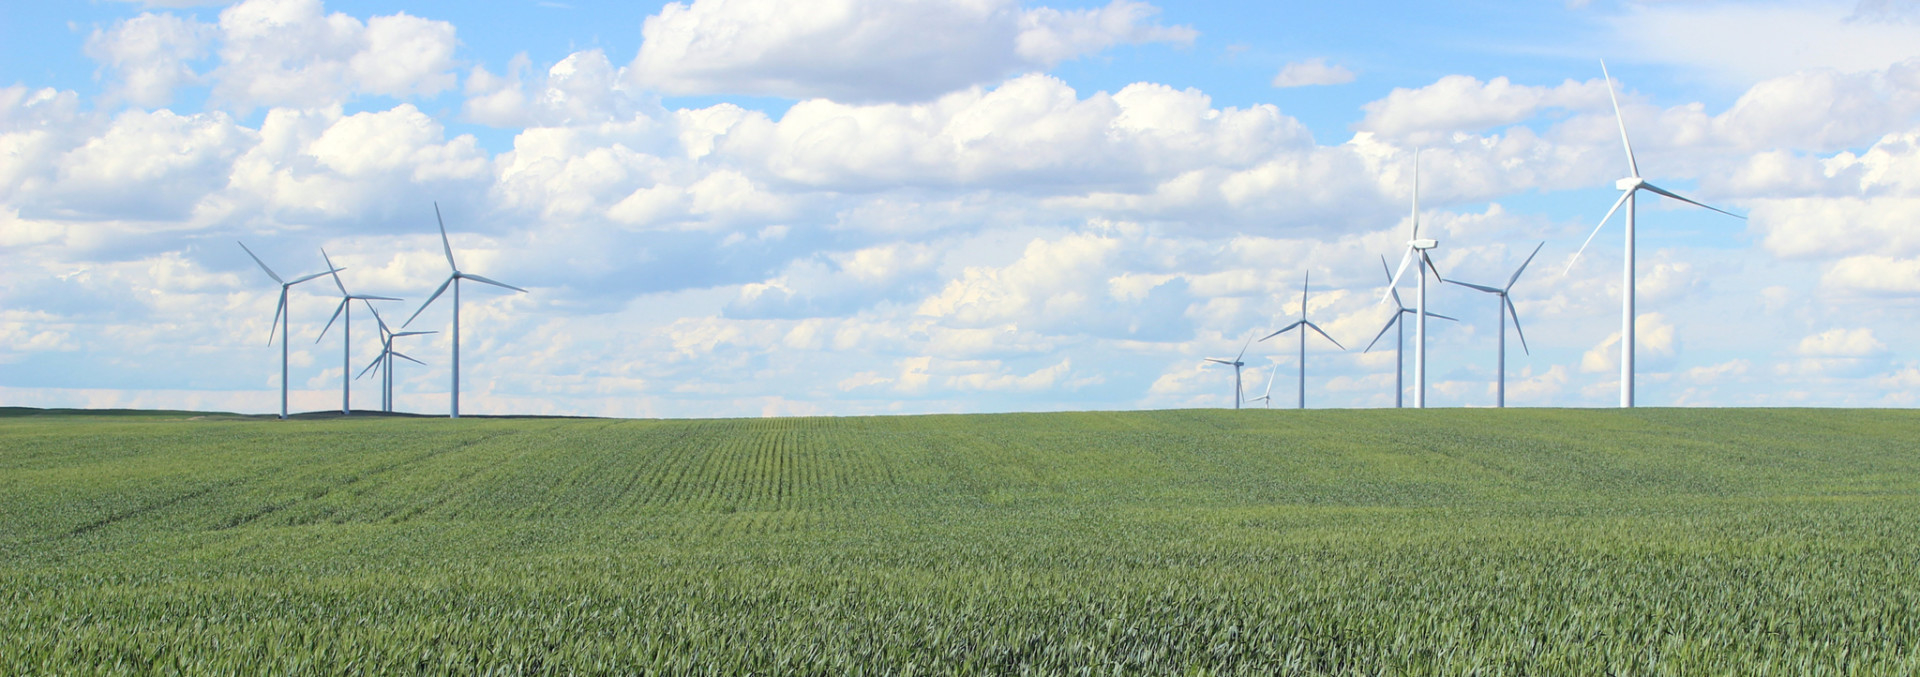 montana wind farm for sale HJ quarters farm price reduced